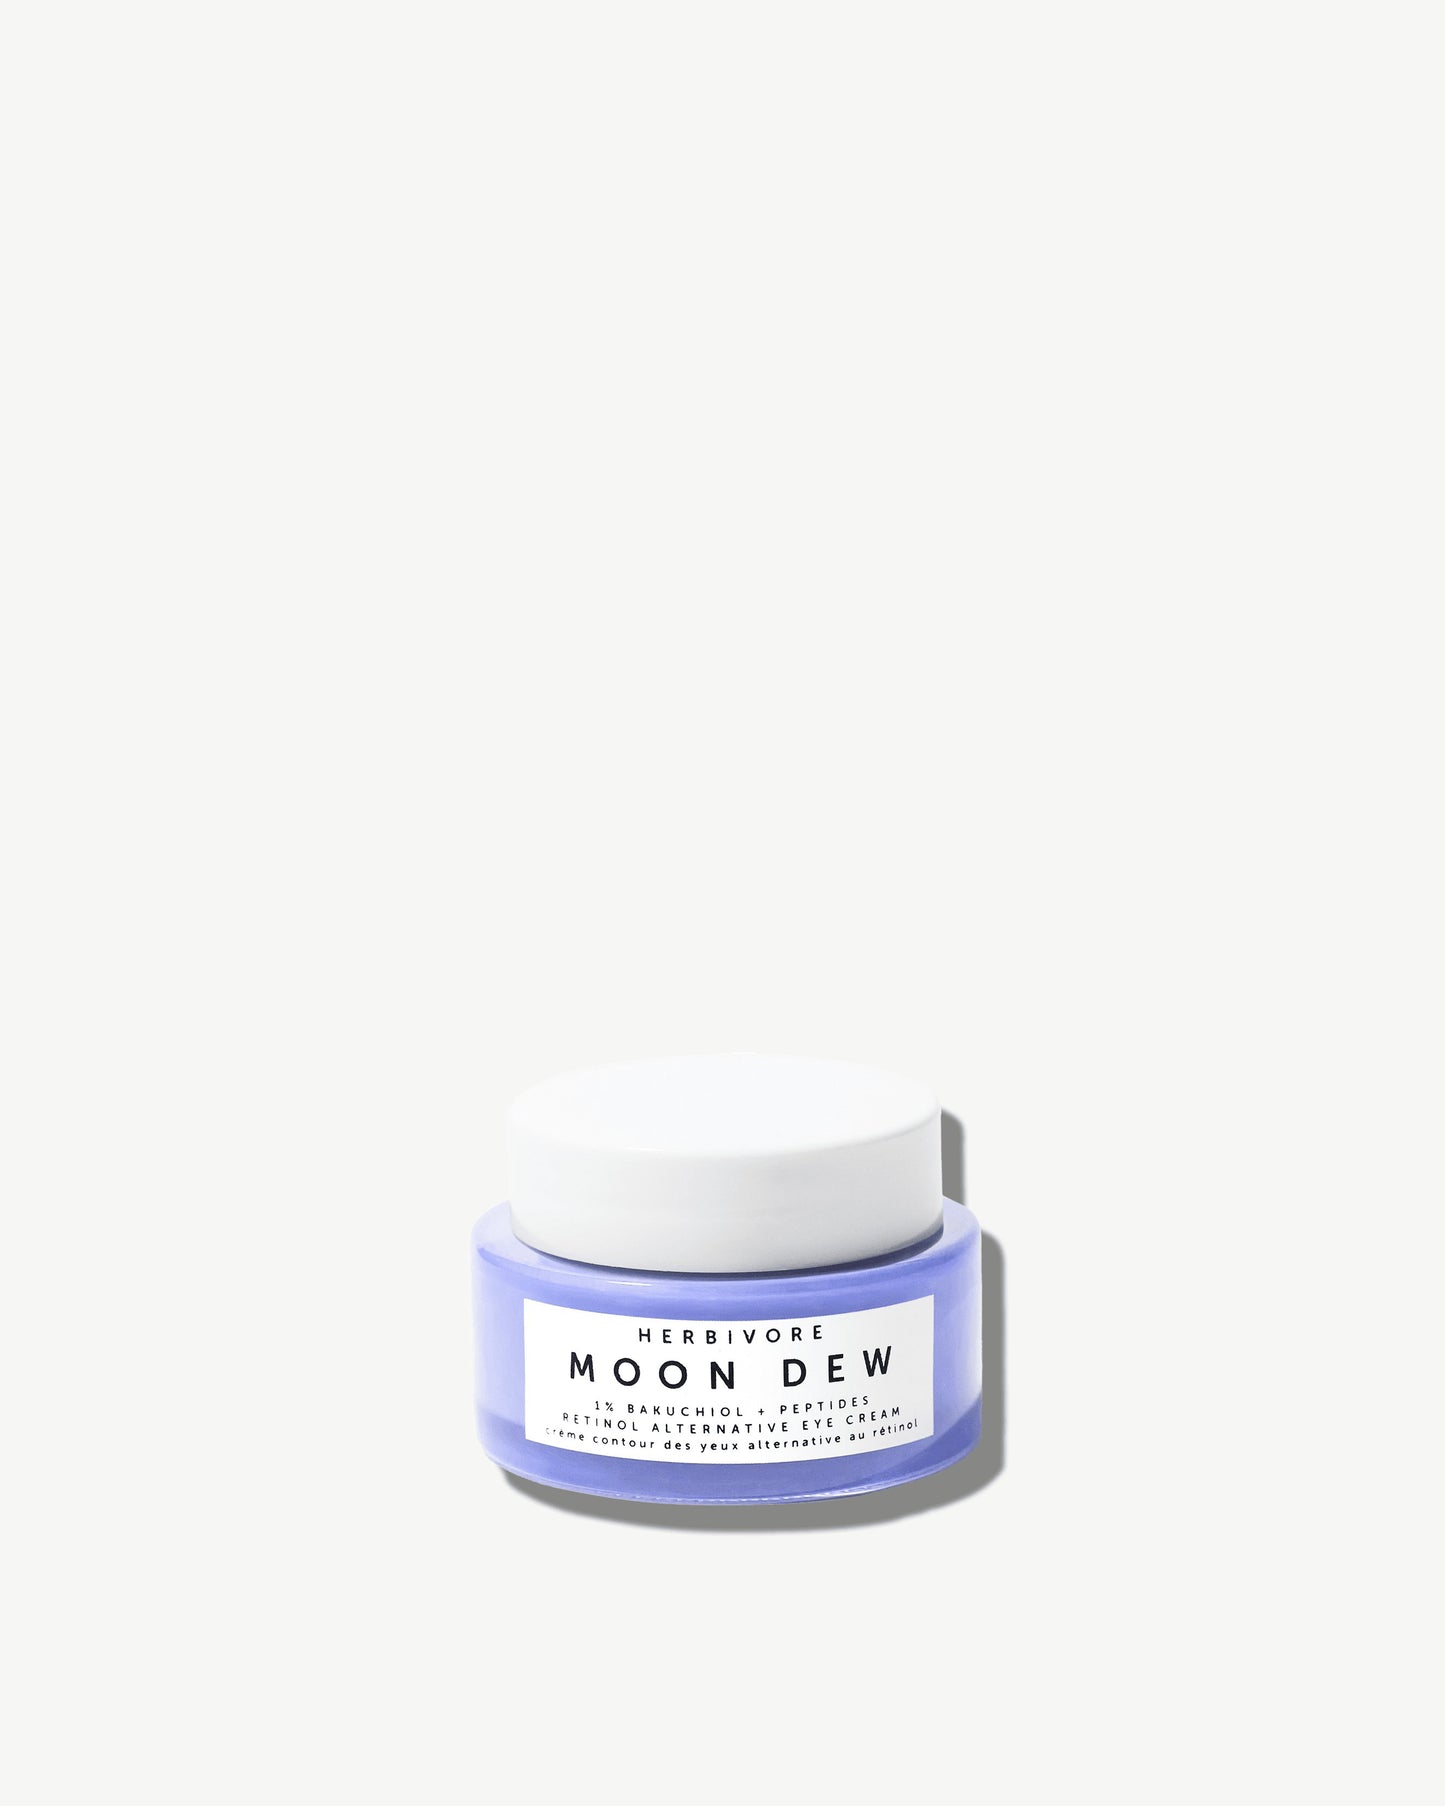 Moon Dew 1% Bakuchiol + Peptides Retinol Alternative Eye Cream